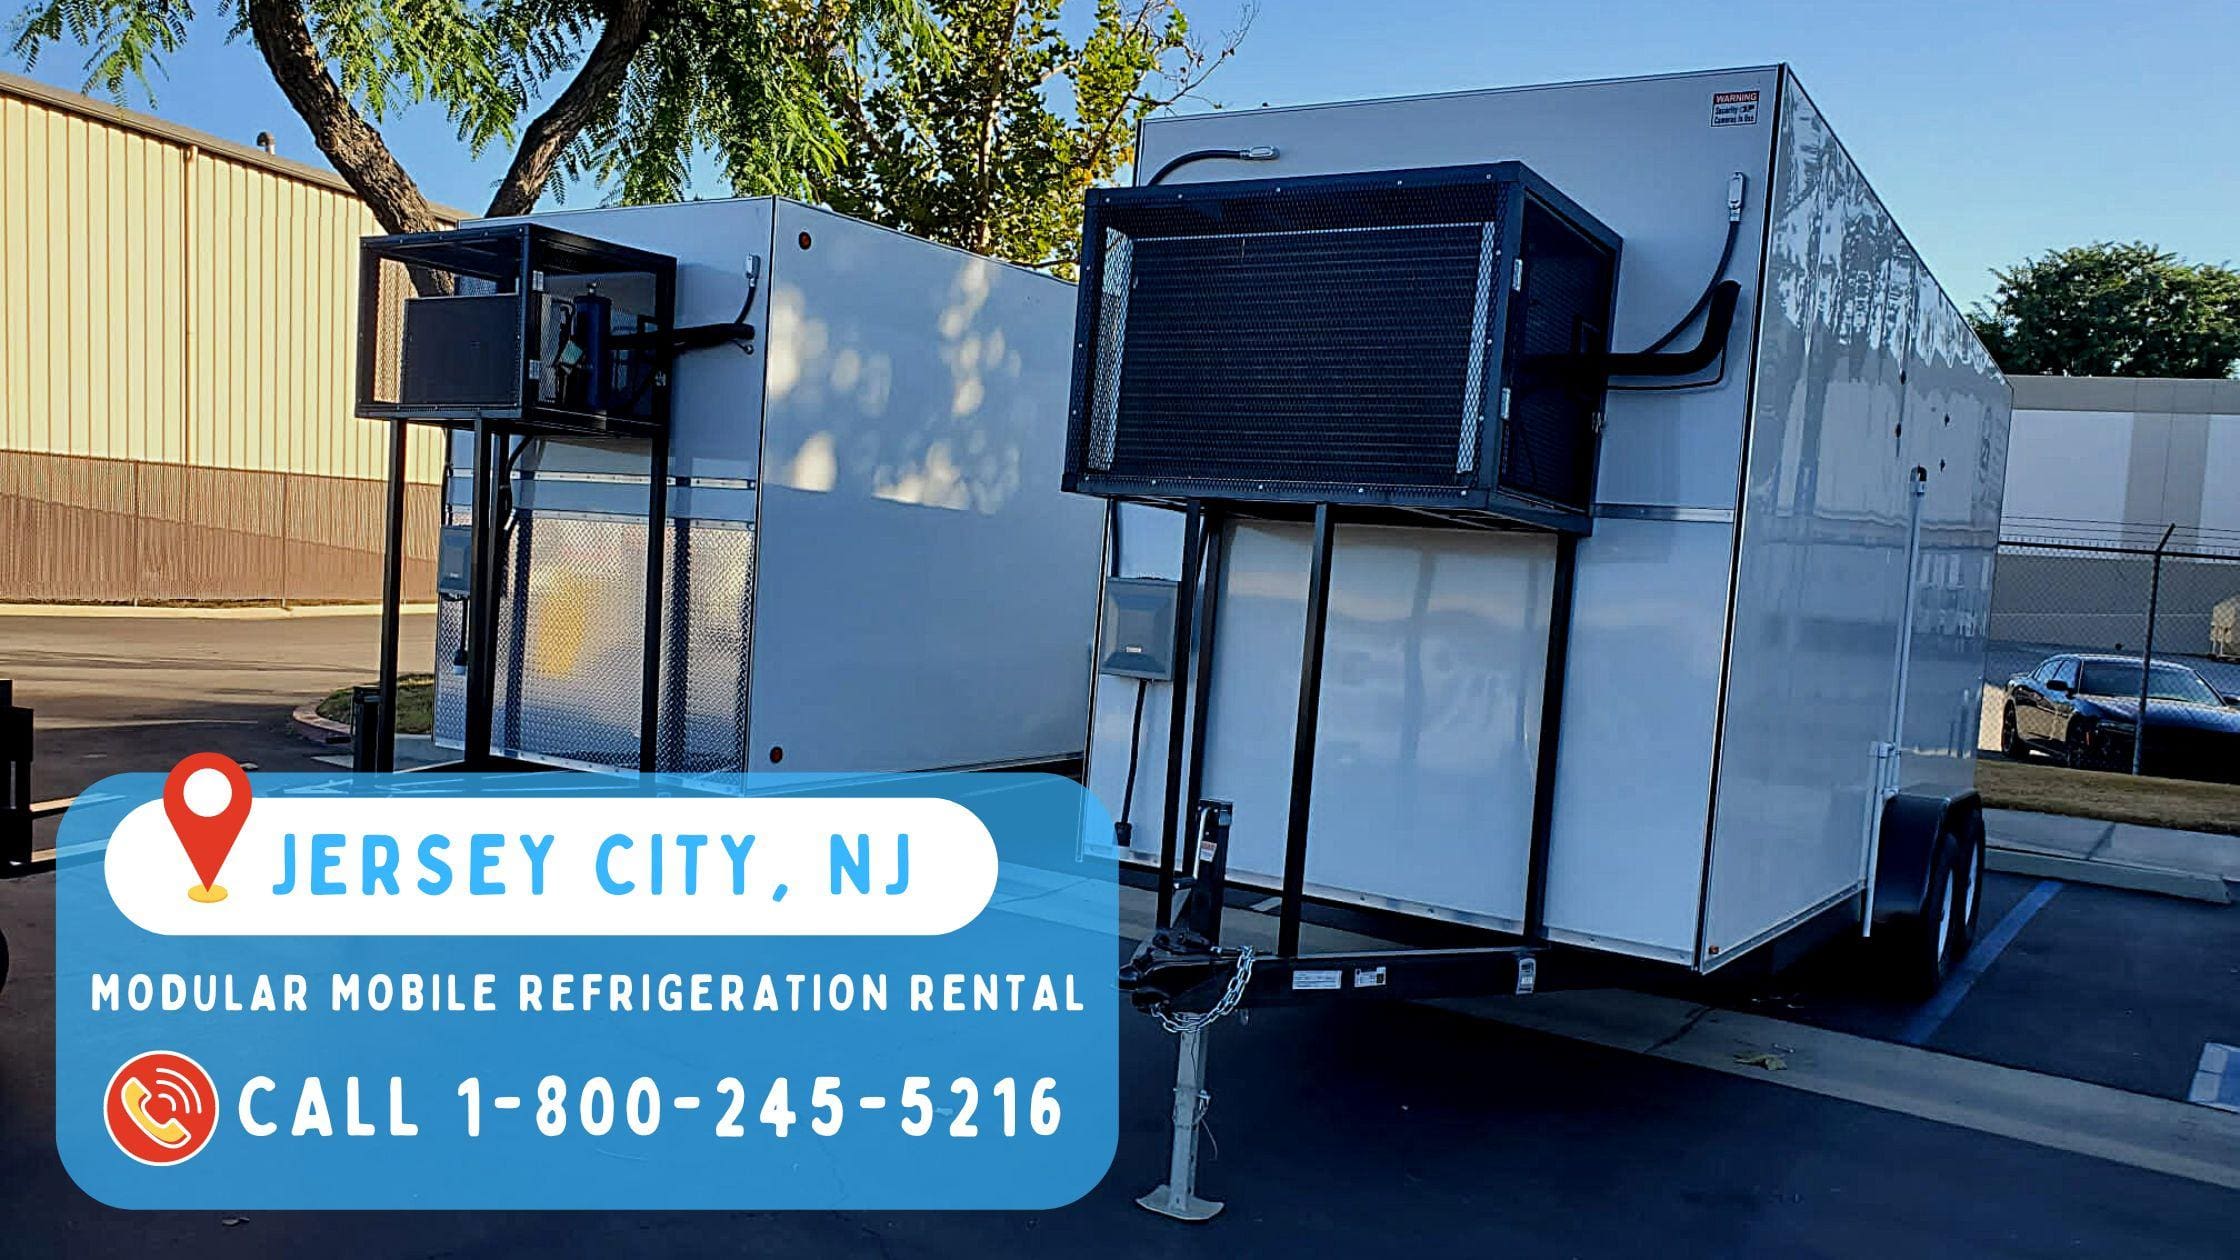 Modular Mobile Refrigeration Rental in Jersey City